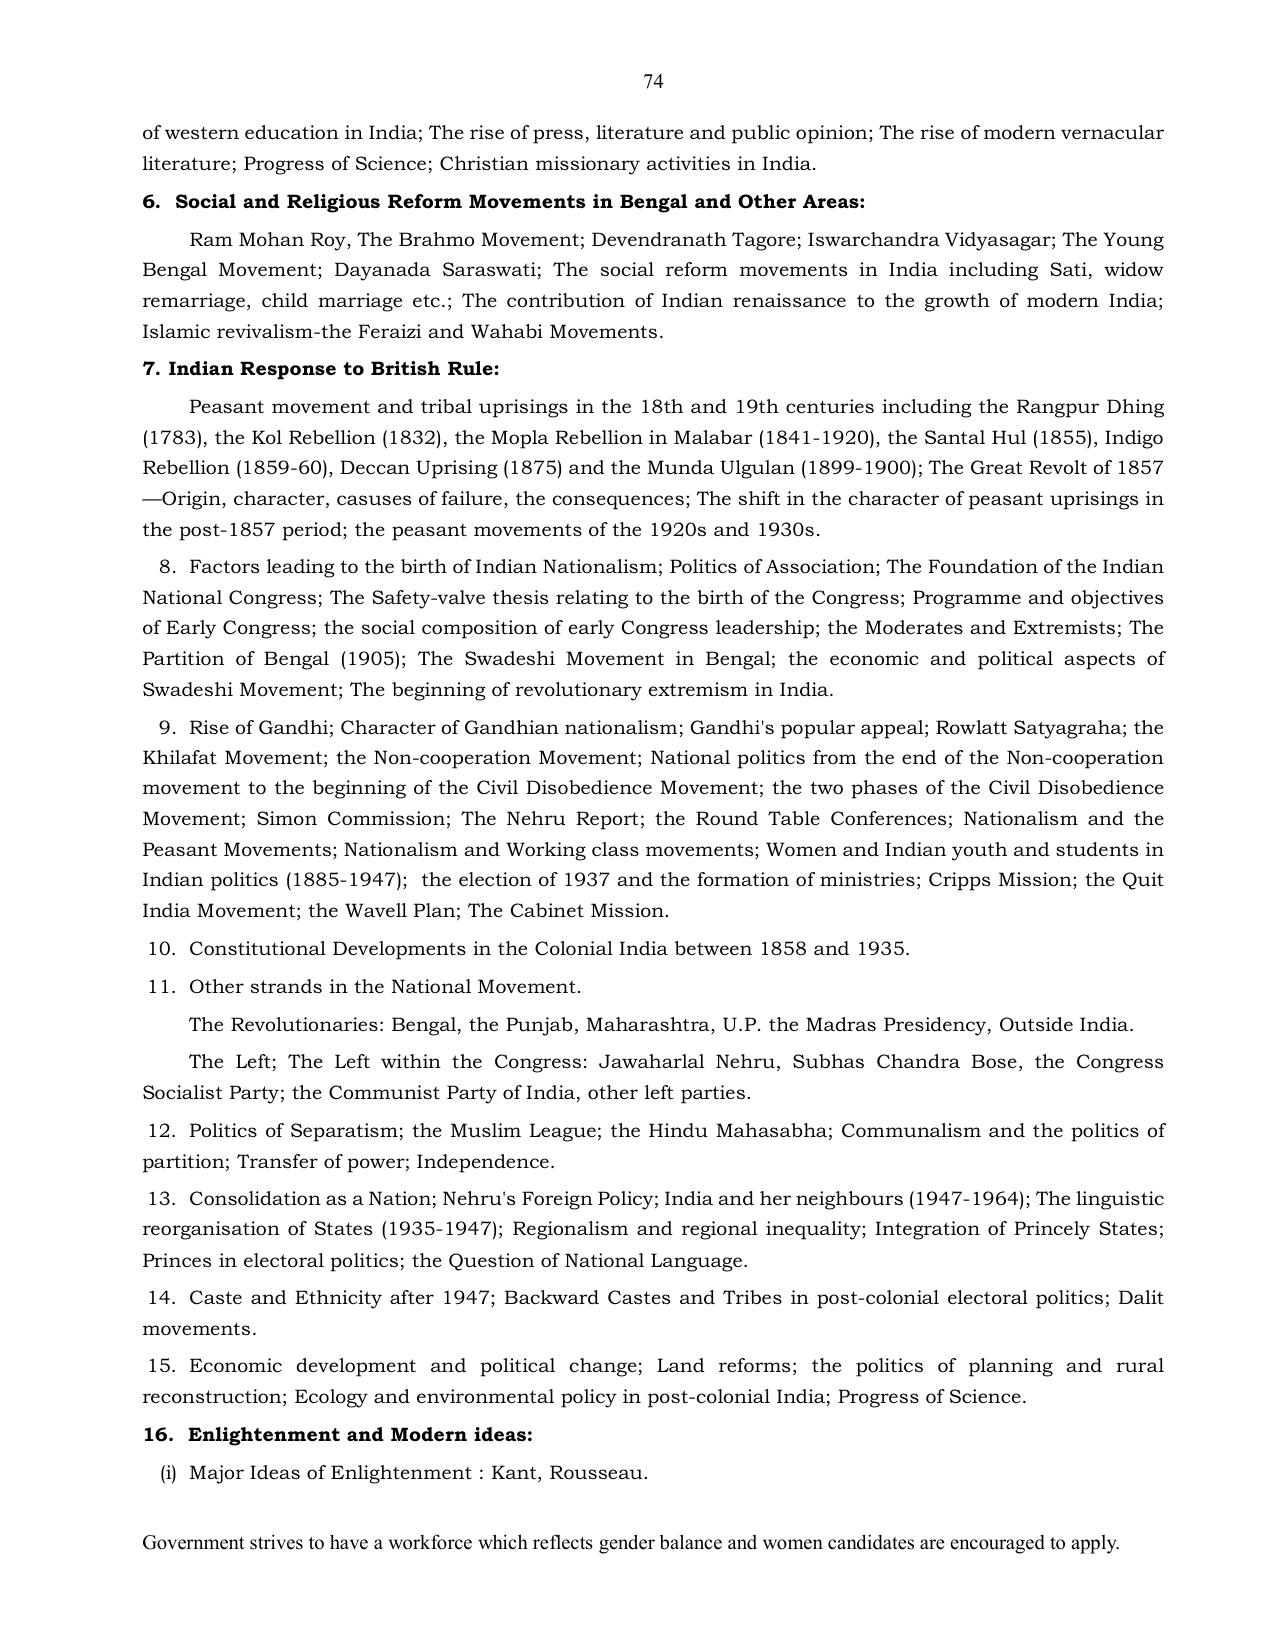 UPSC Syllabus Prelims & Mains Pdf Link - Page 50